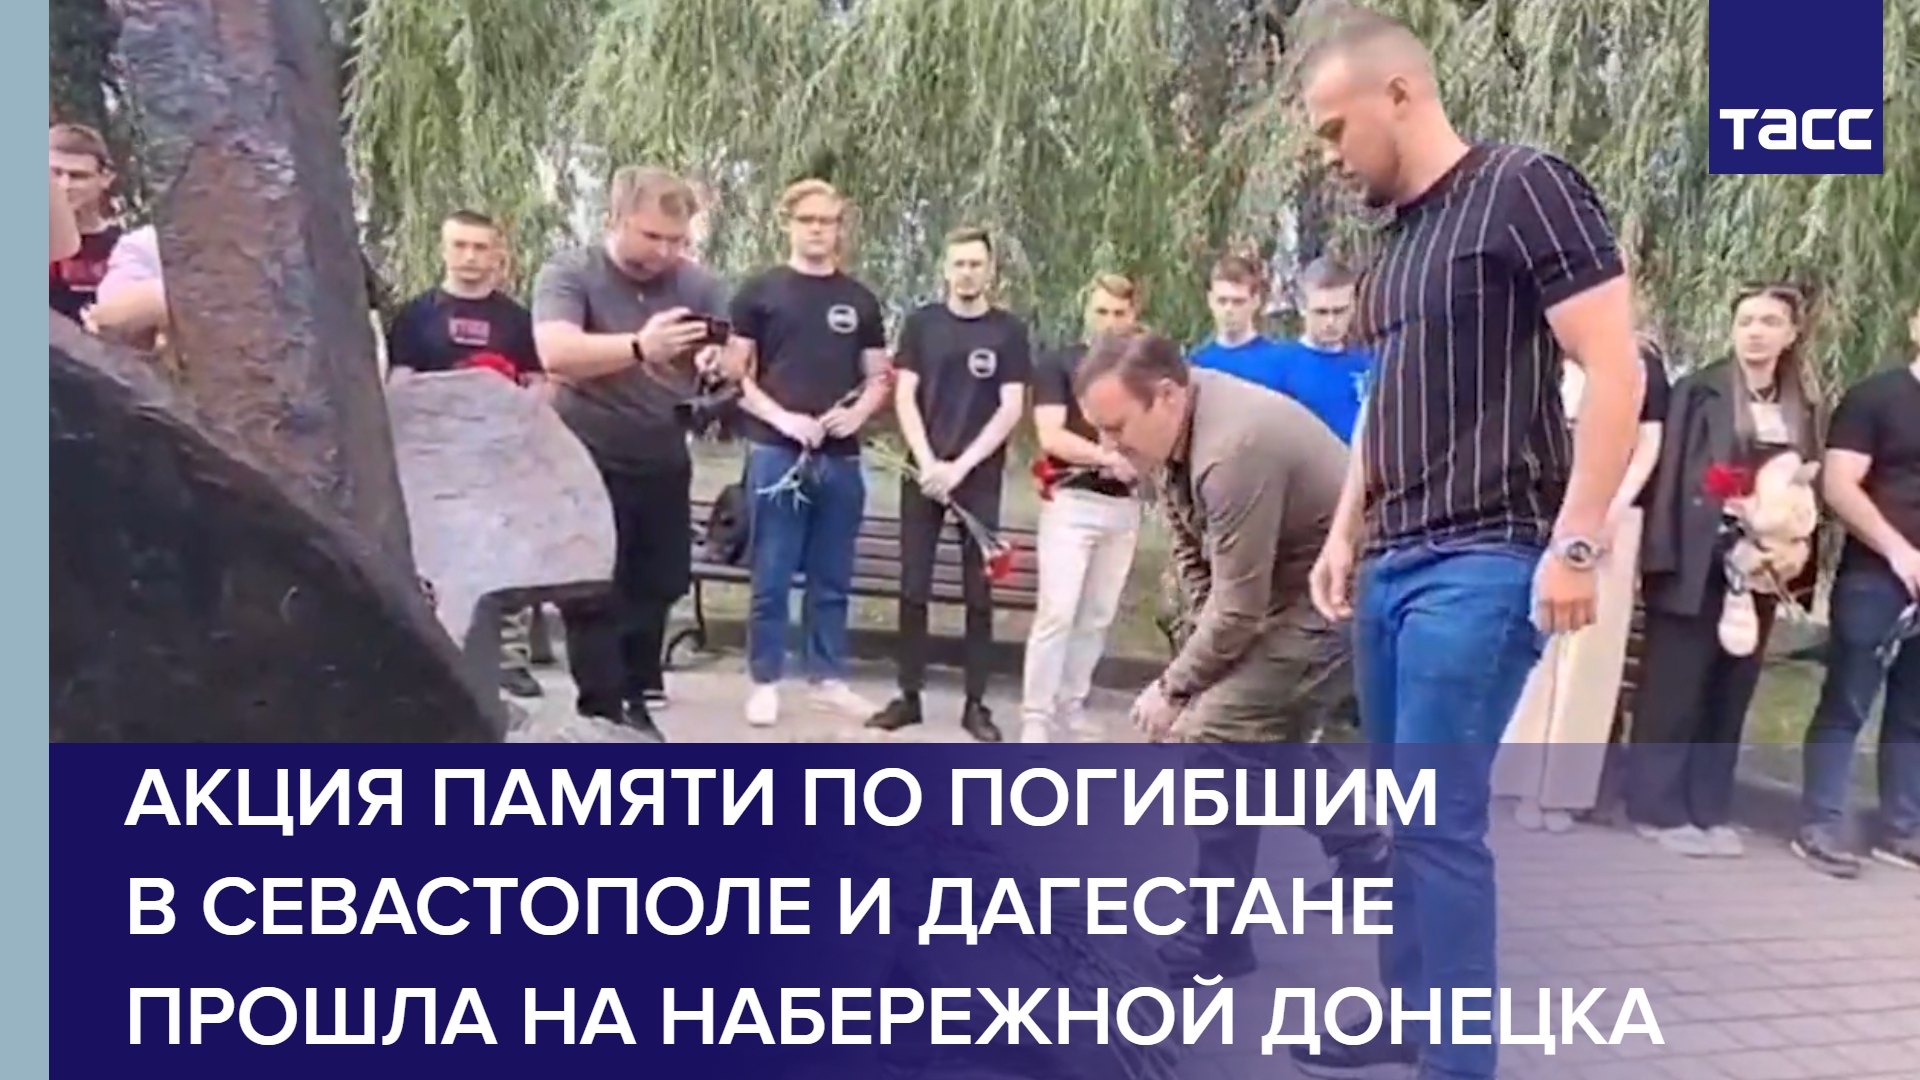 Акция памяти по погибшим в Севастополе и Дагестане  прошла на набережной Донецка